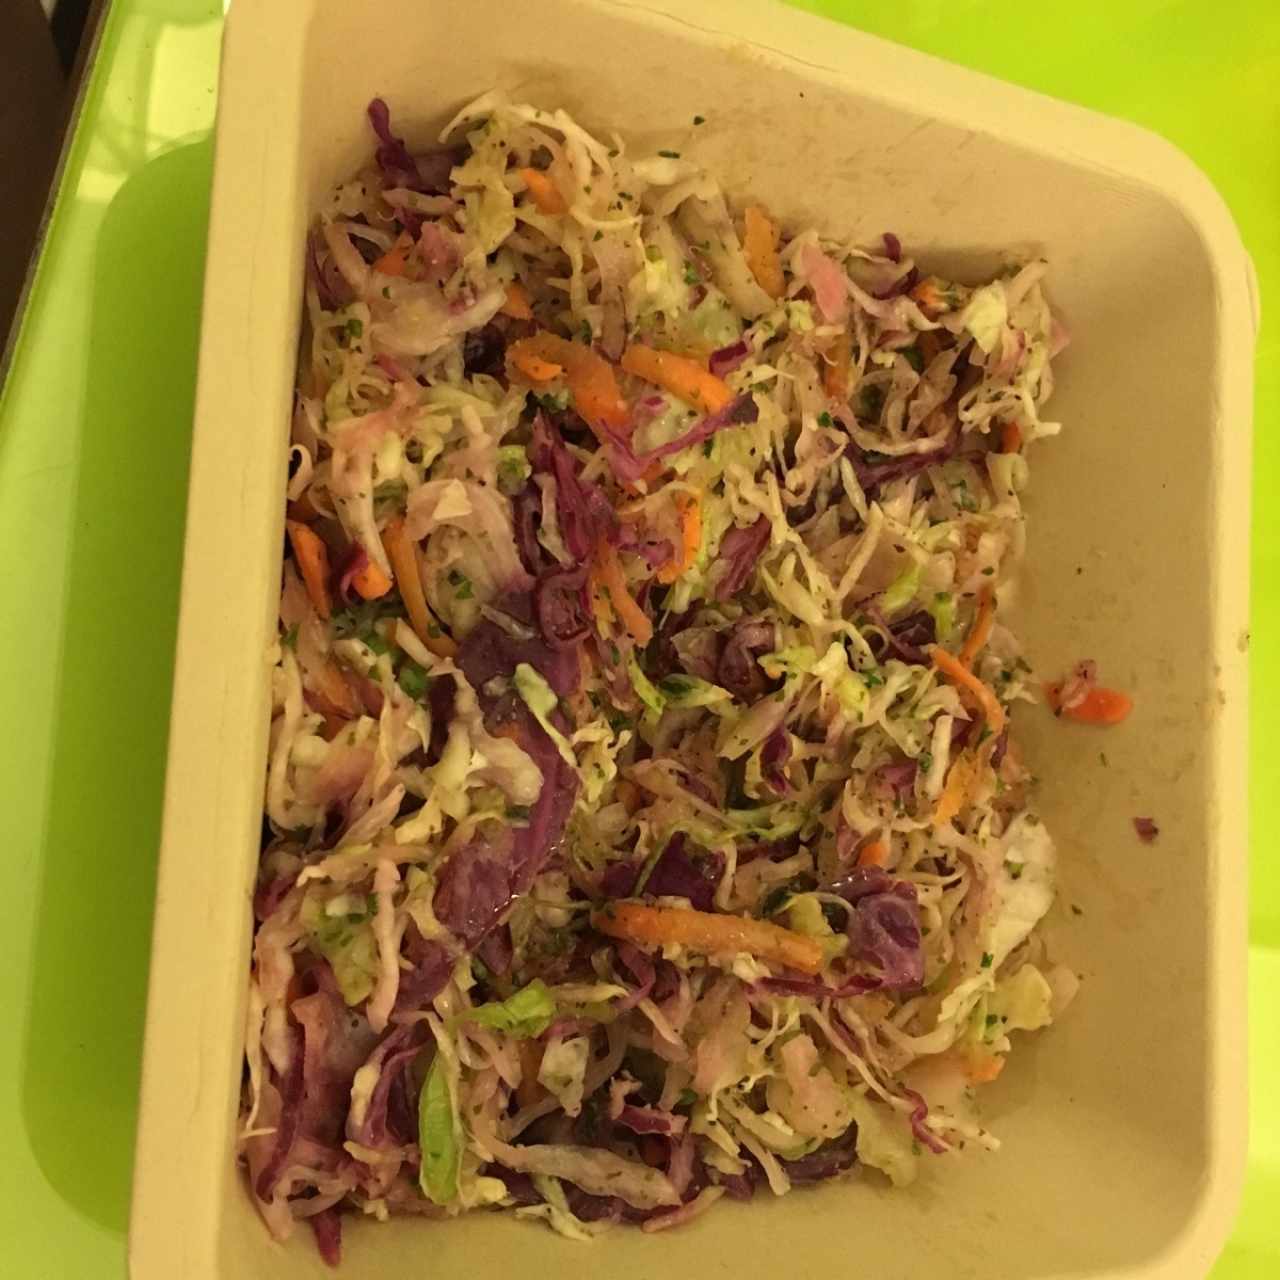 mix salad